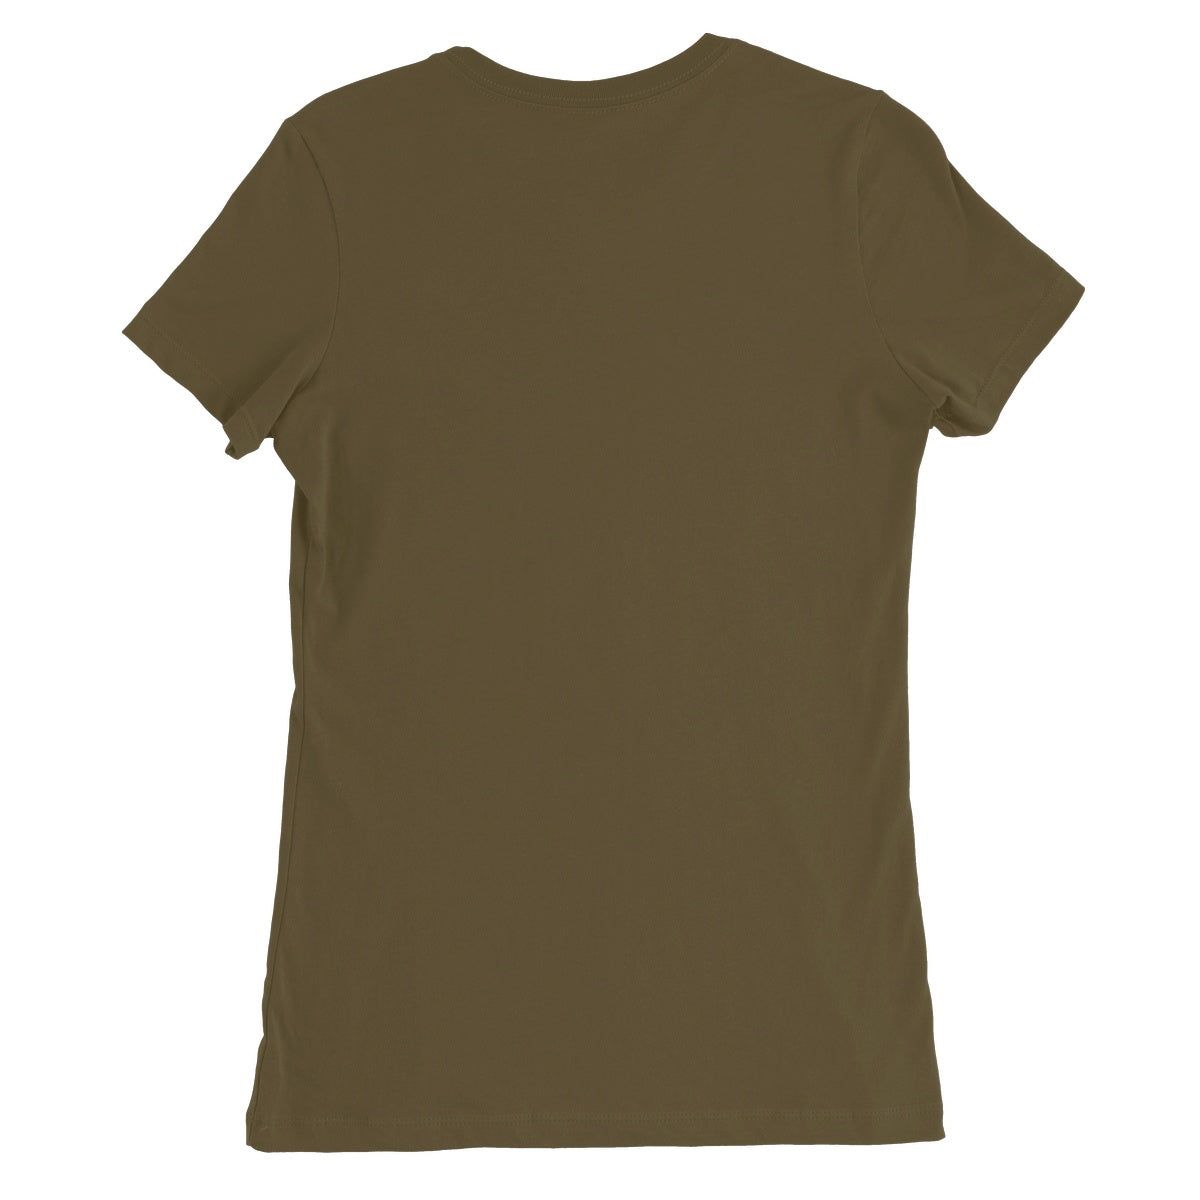 BLONDIE - DEBBIE HARRY #1 Women's Favourite T-Shirt